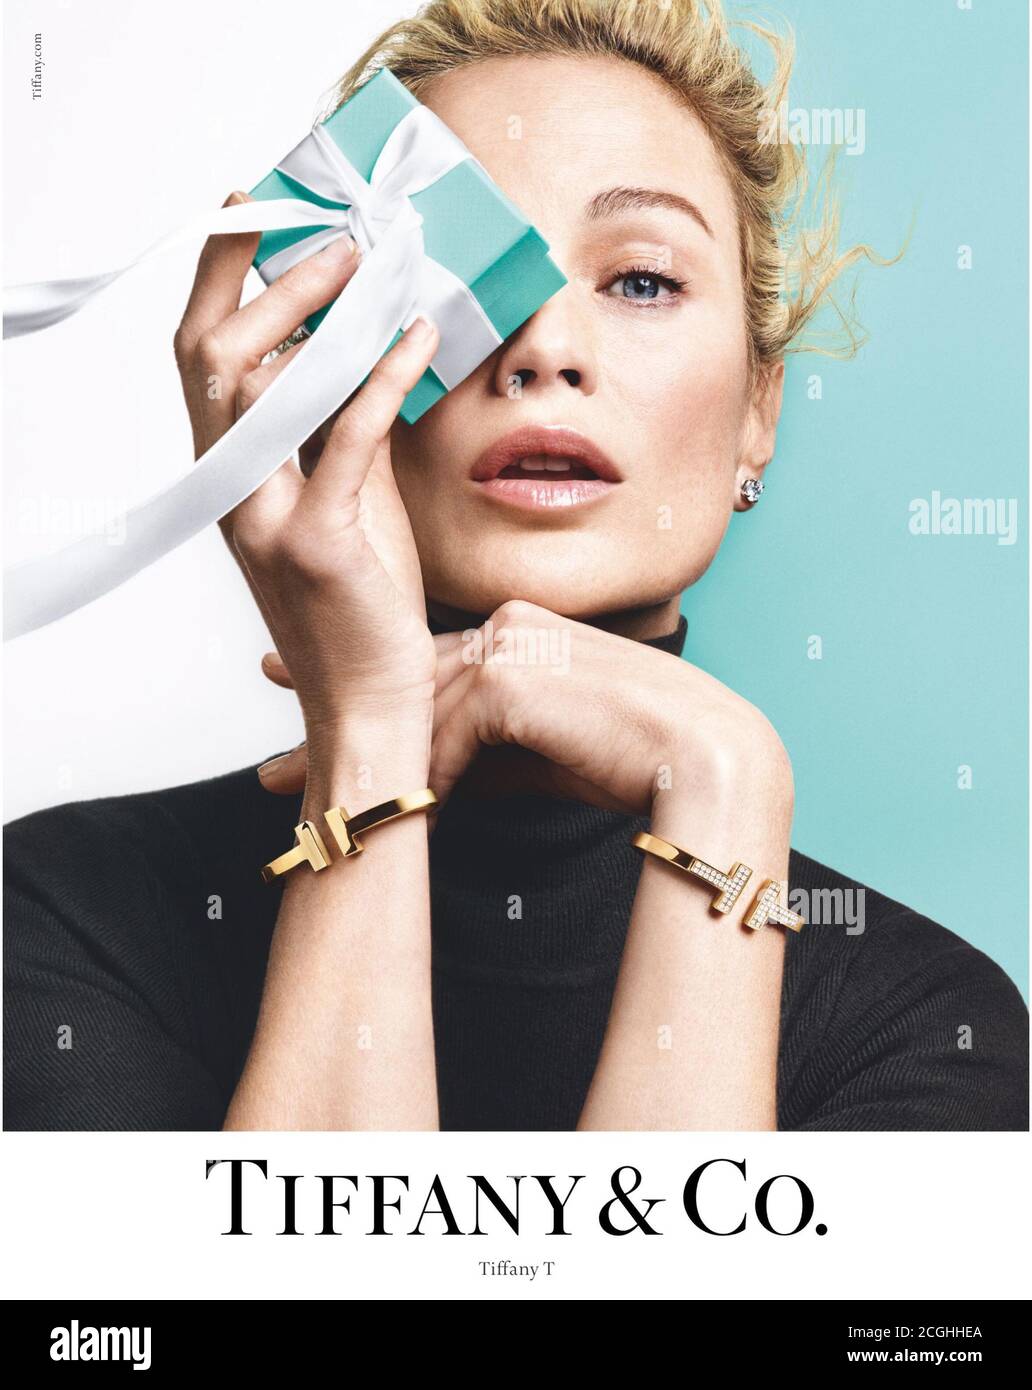 2010s UK Tiffany & Co Magazine Advert Stock Photo - Alamy